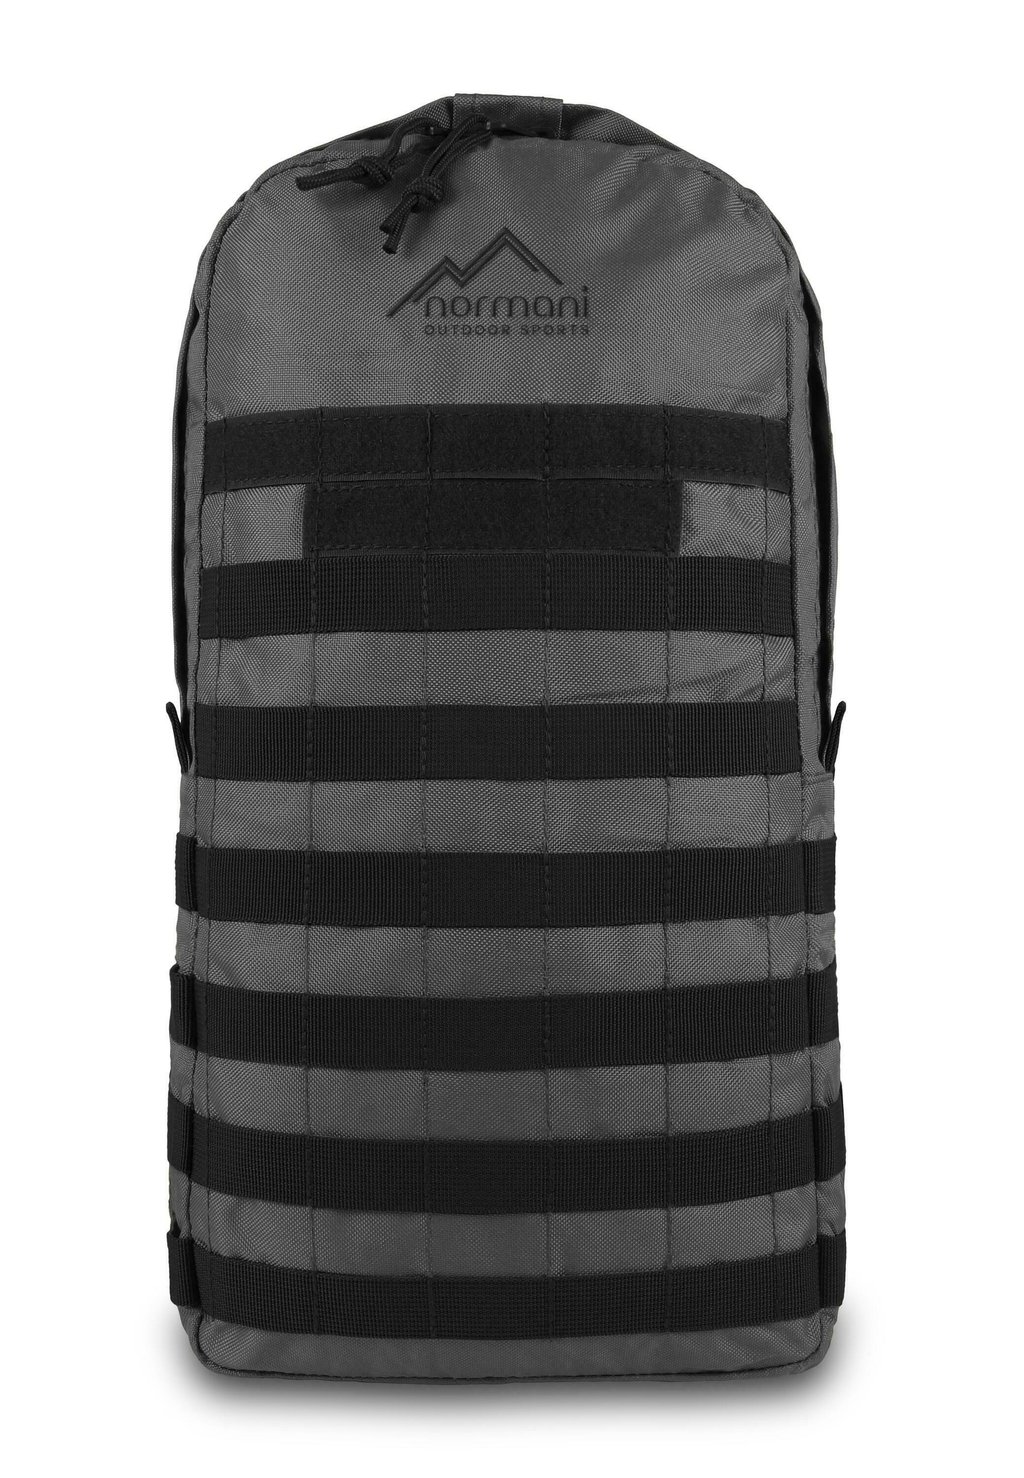 Треккинговый рюкзак BARRACUDA 8L DAYPACK normani Outdoor Sports, цвет anthrazit цена и фото